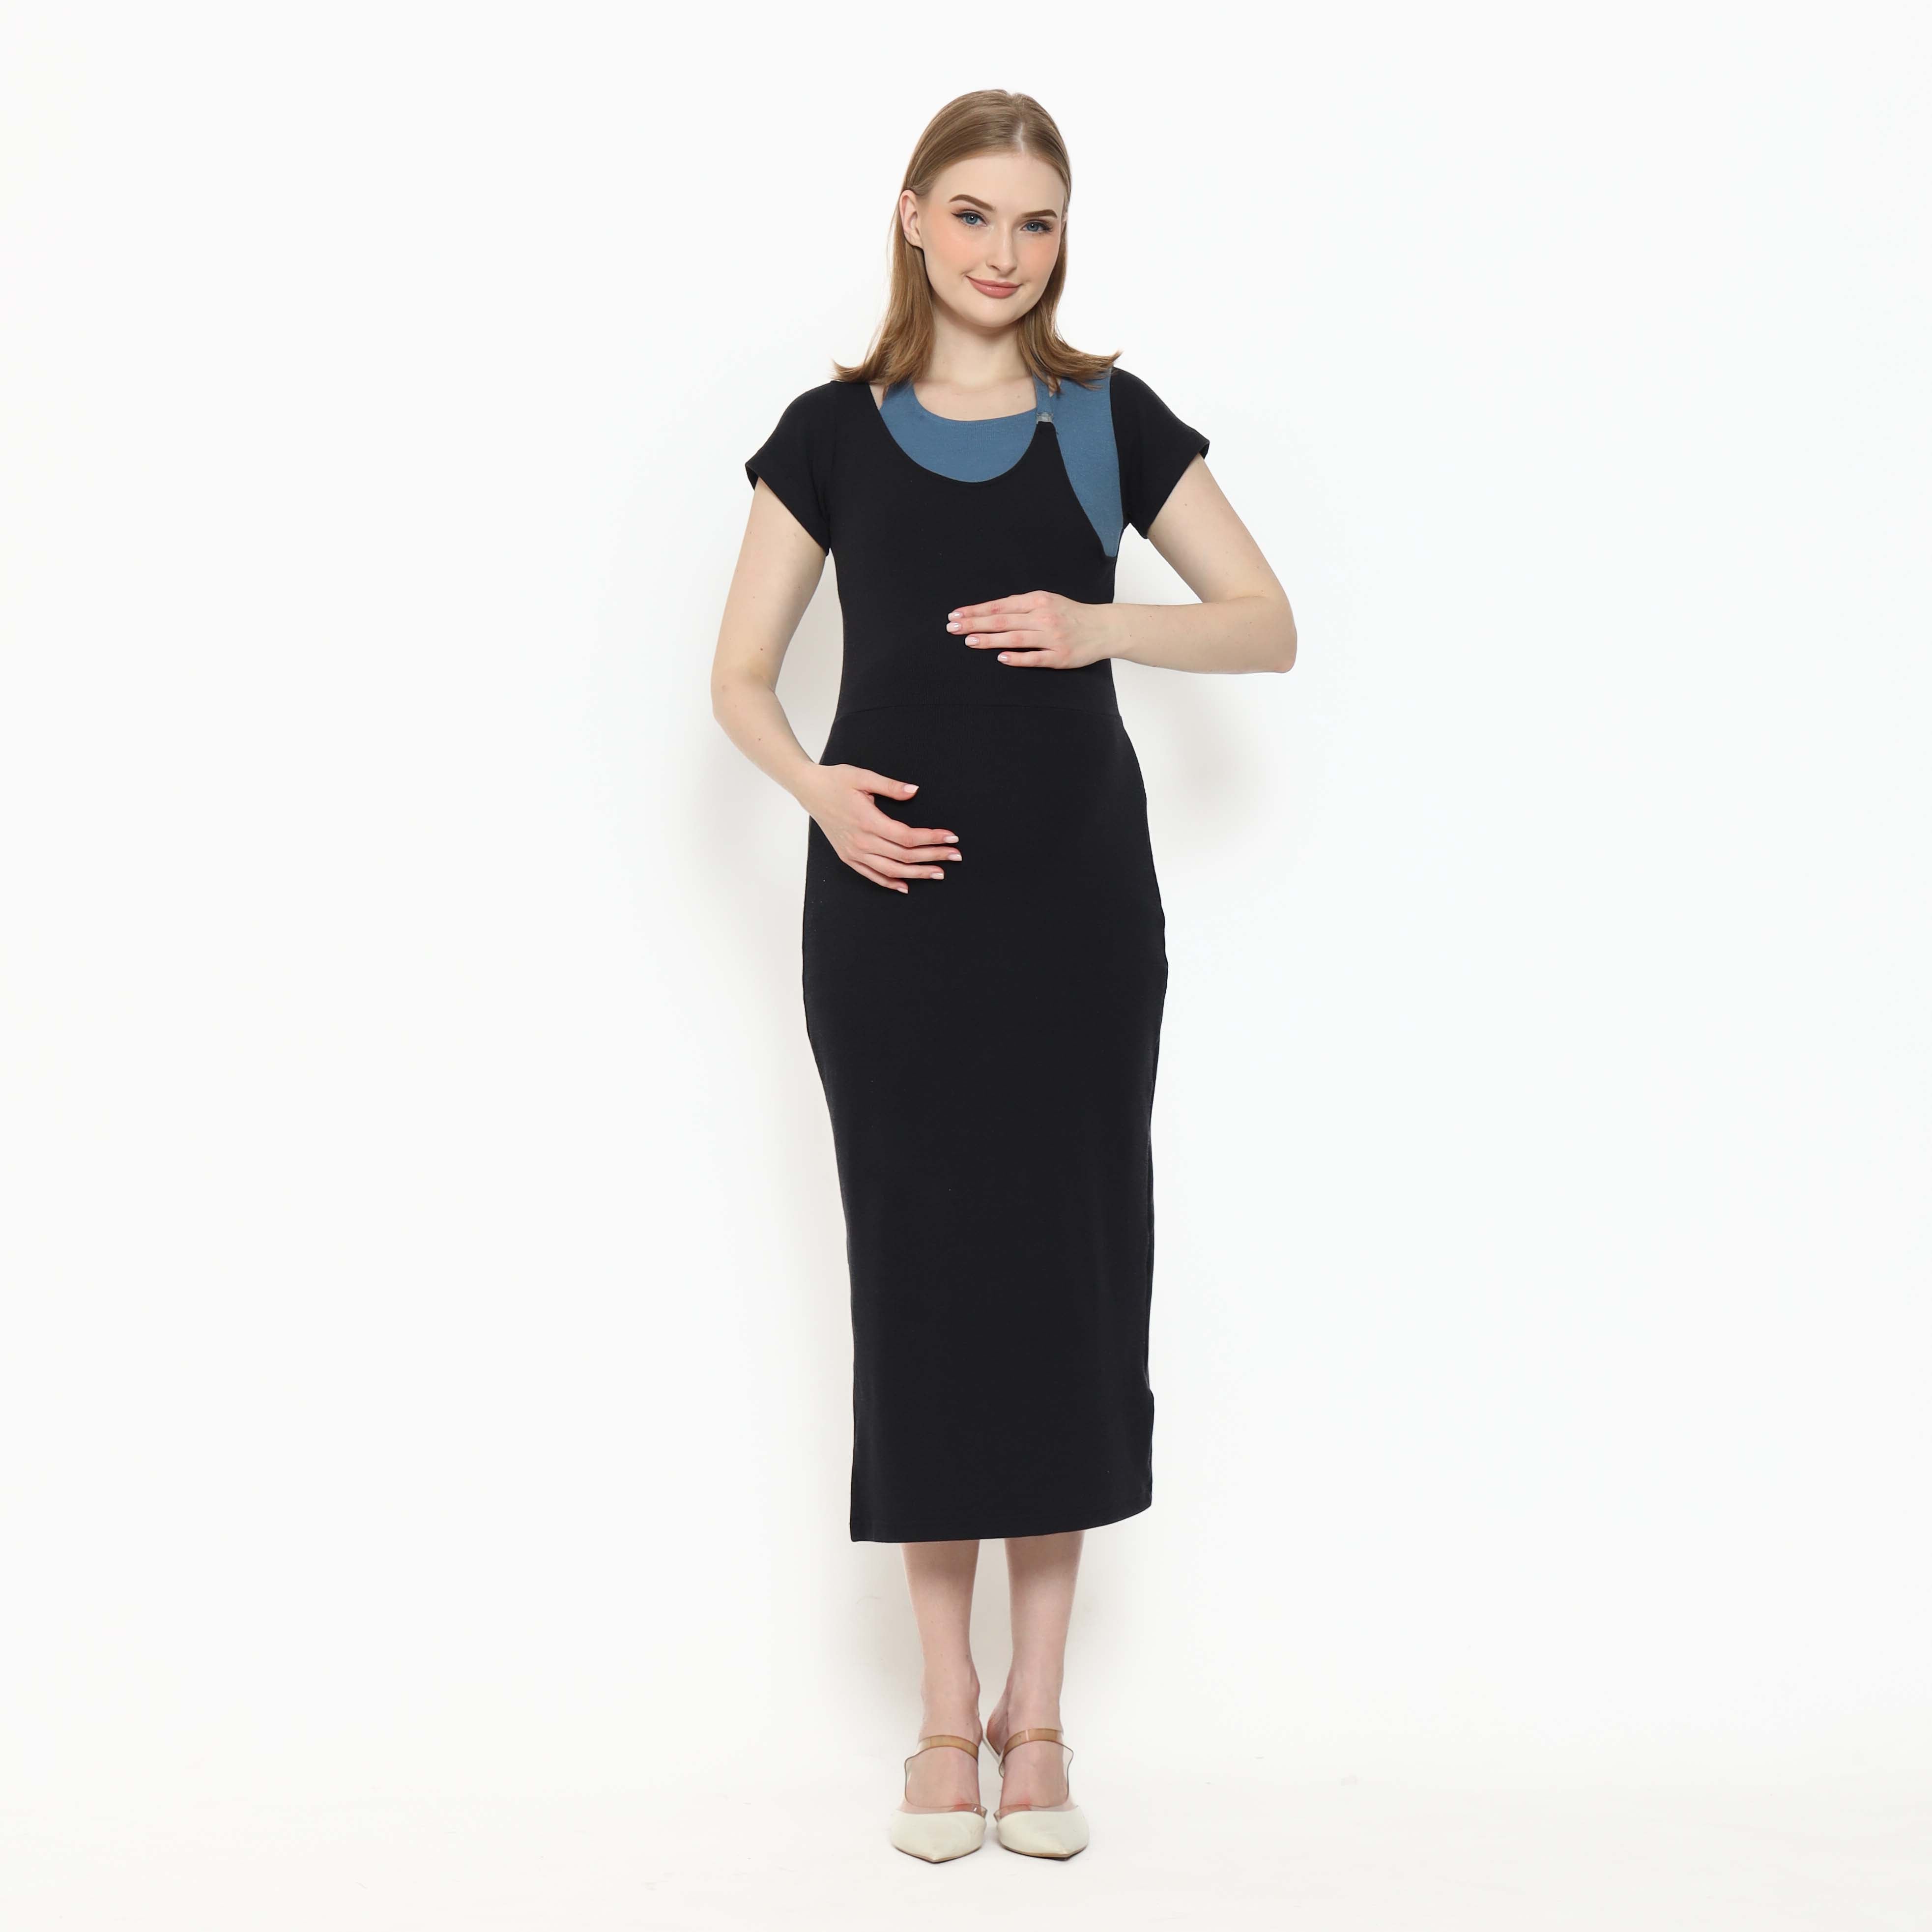 Zebbie Knit Dress with Nursing Strap in Black